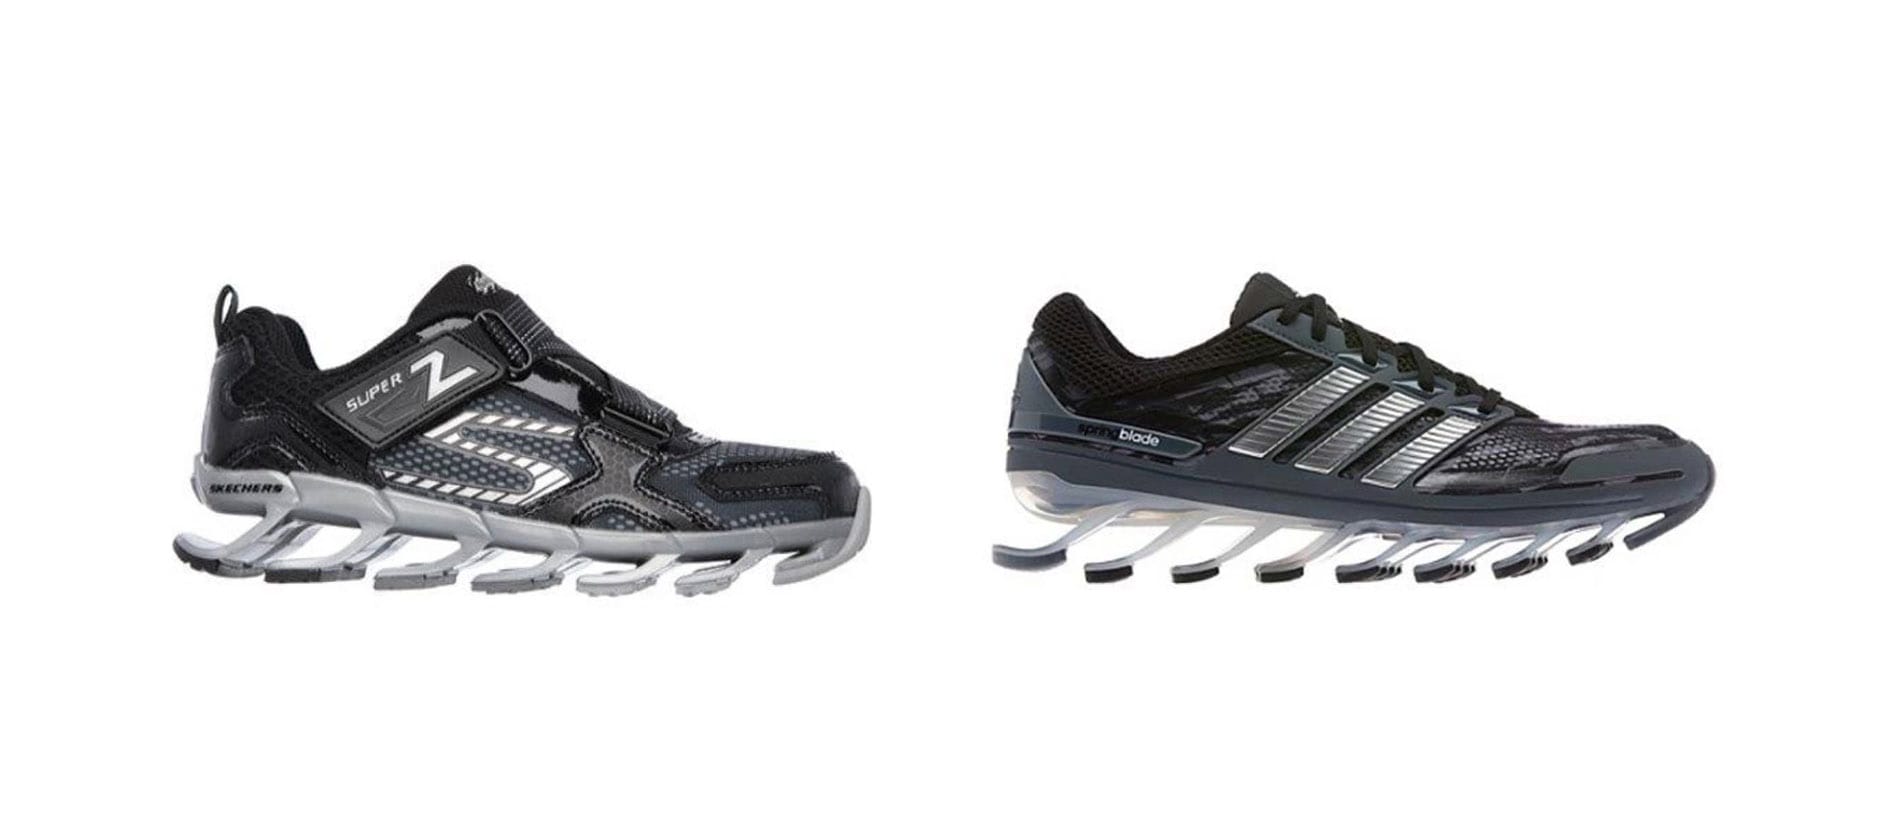 skechers shoes vs adidas